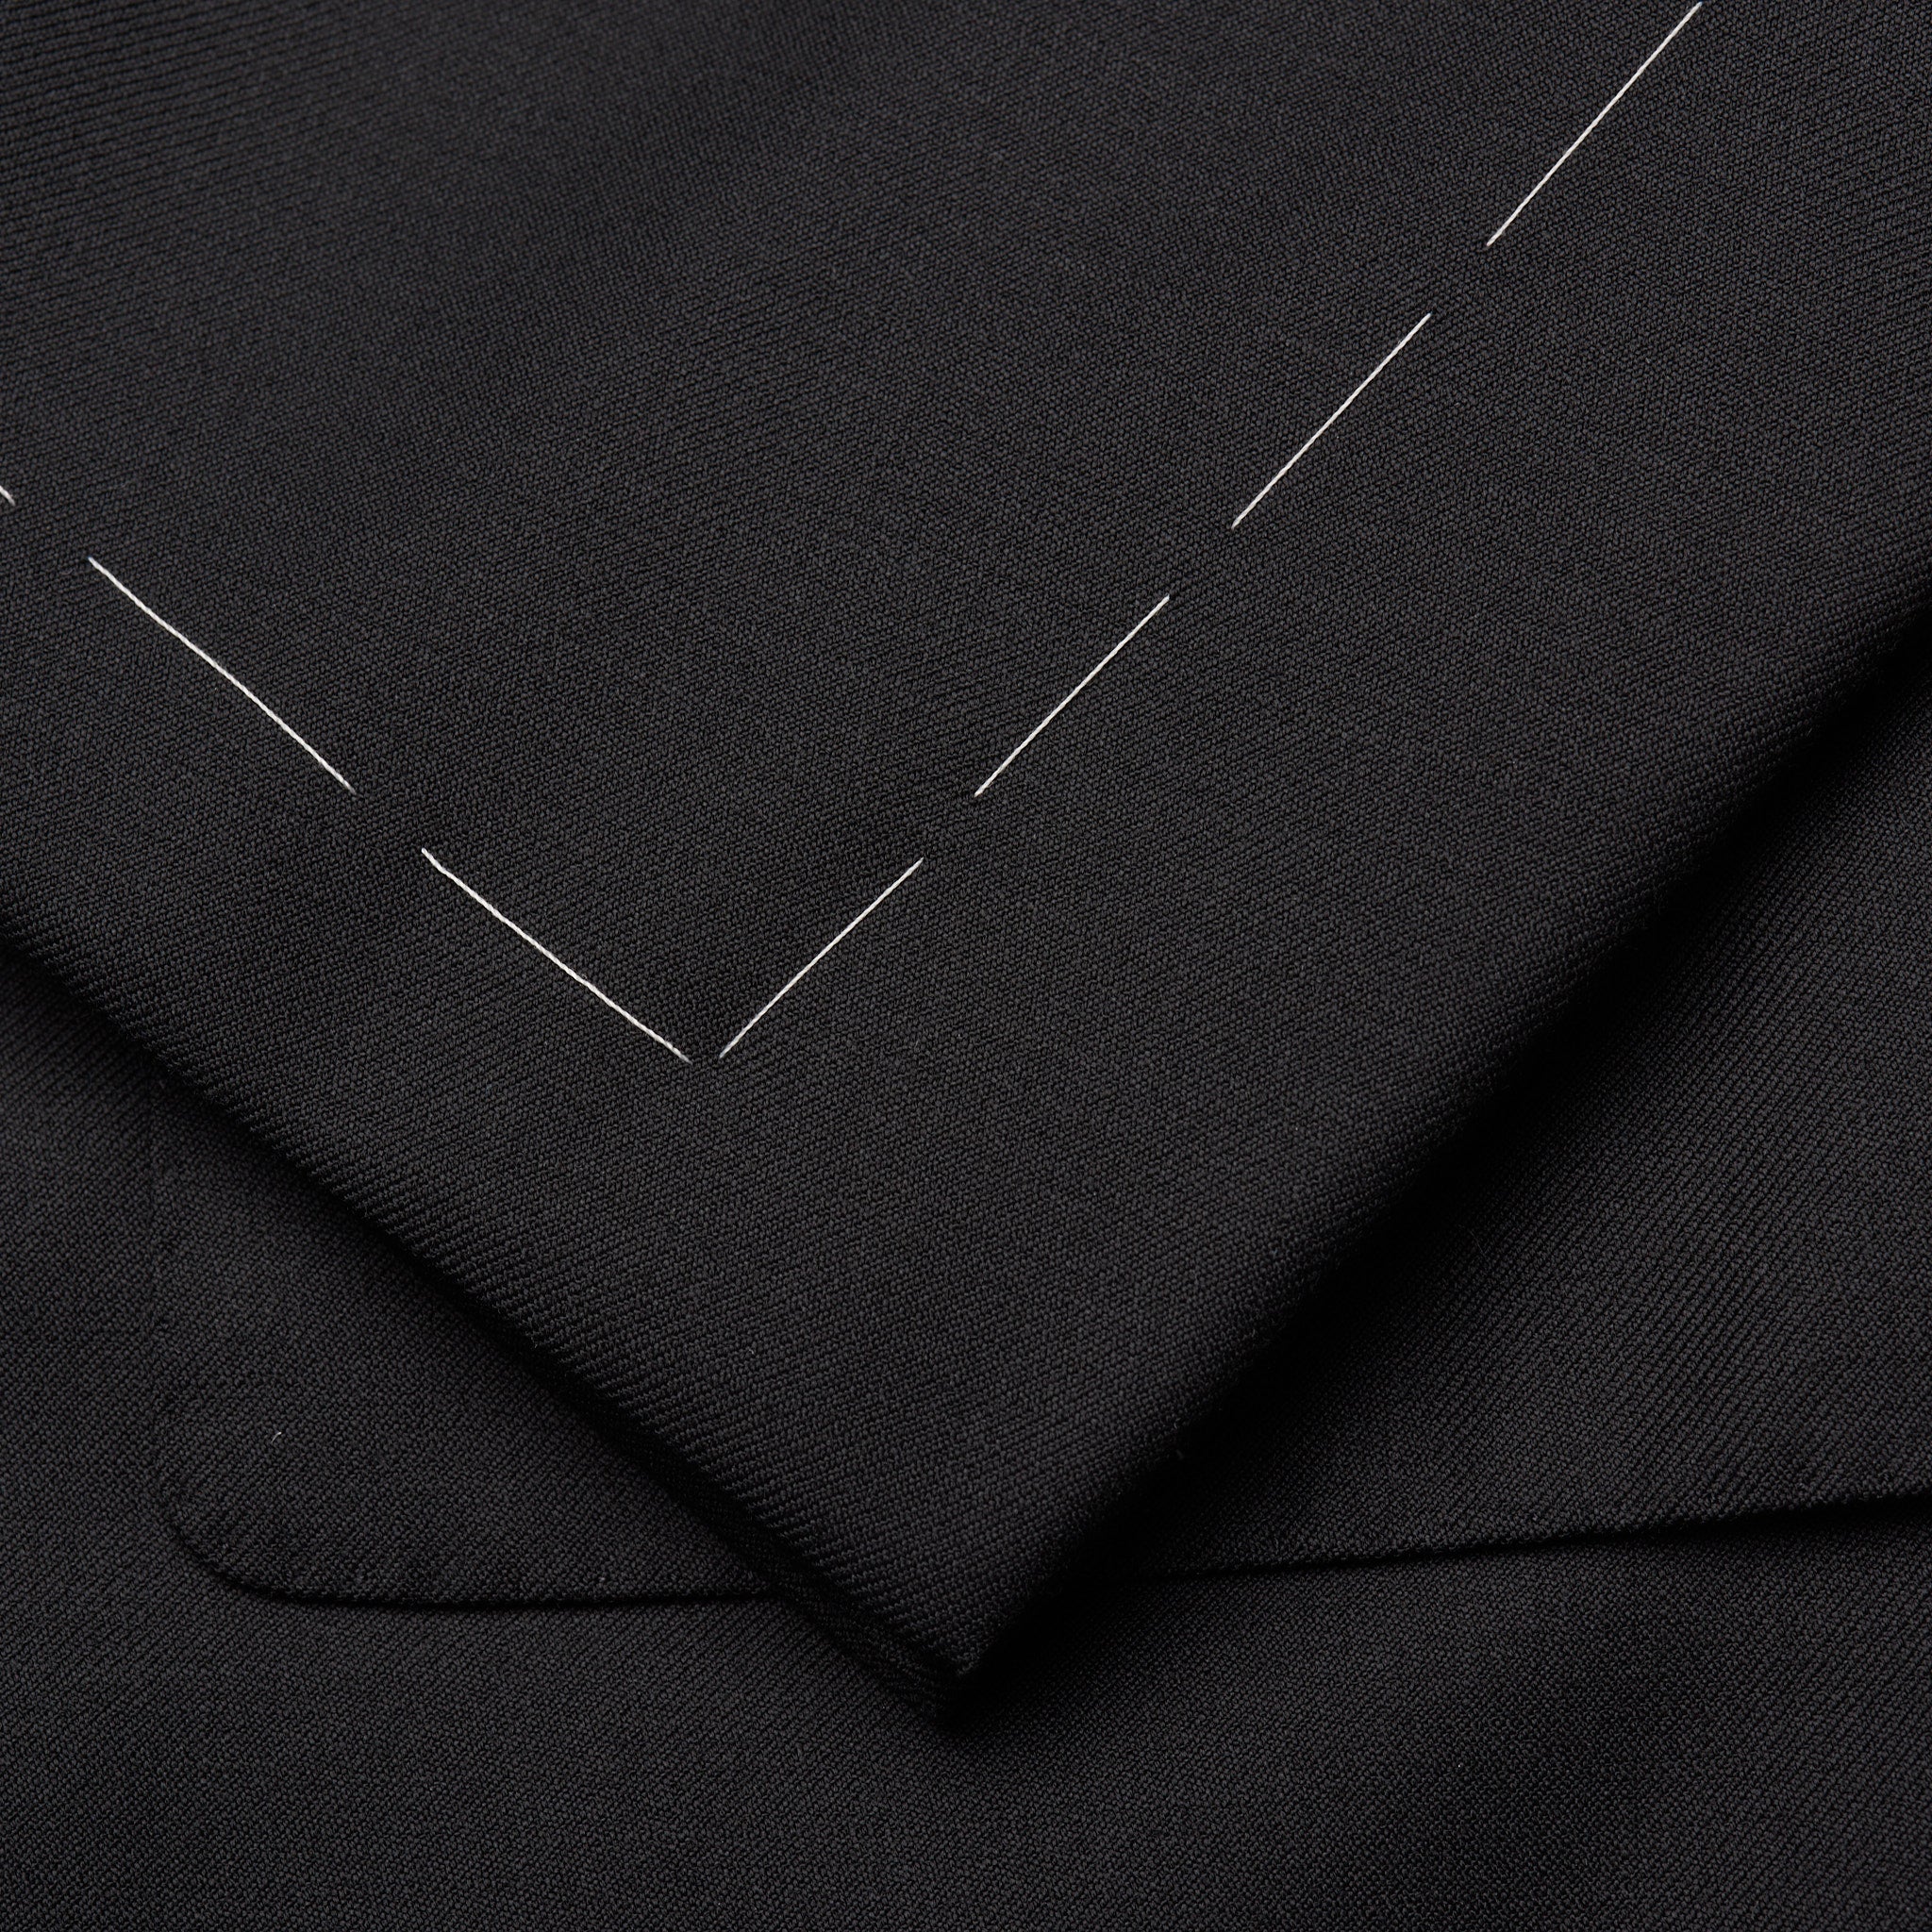 D'AVENZA for FERU Handmade Black Wool Elegant Suit EU 50 NEW US 40 D'AVENZA